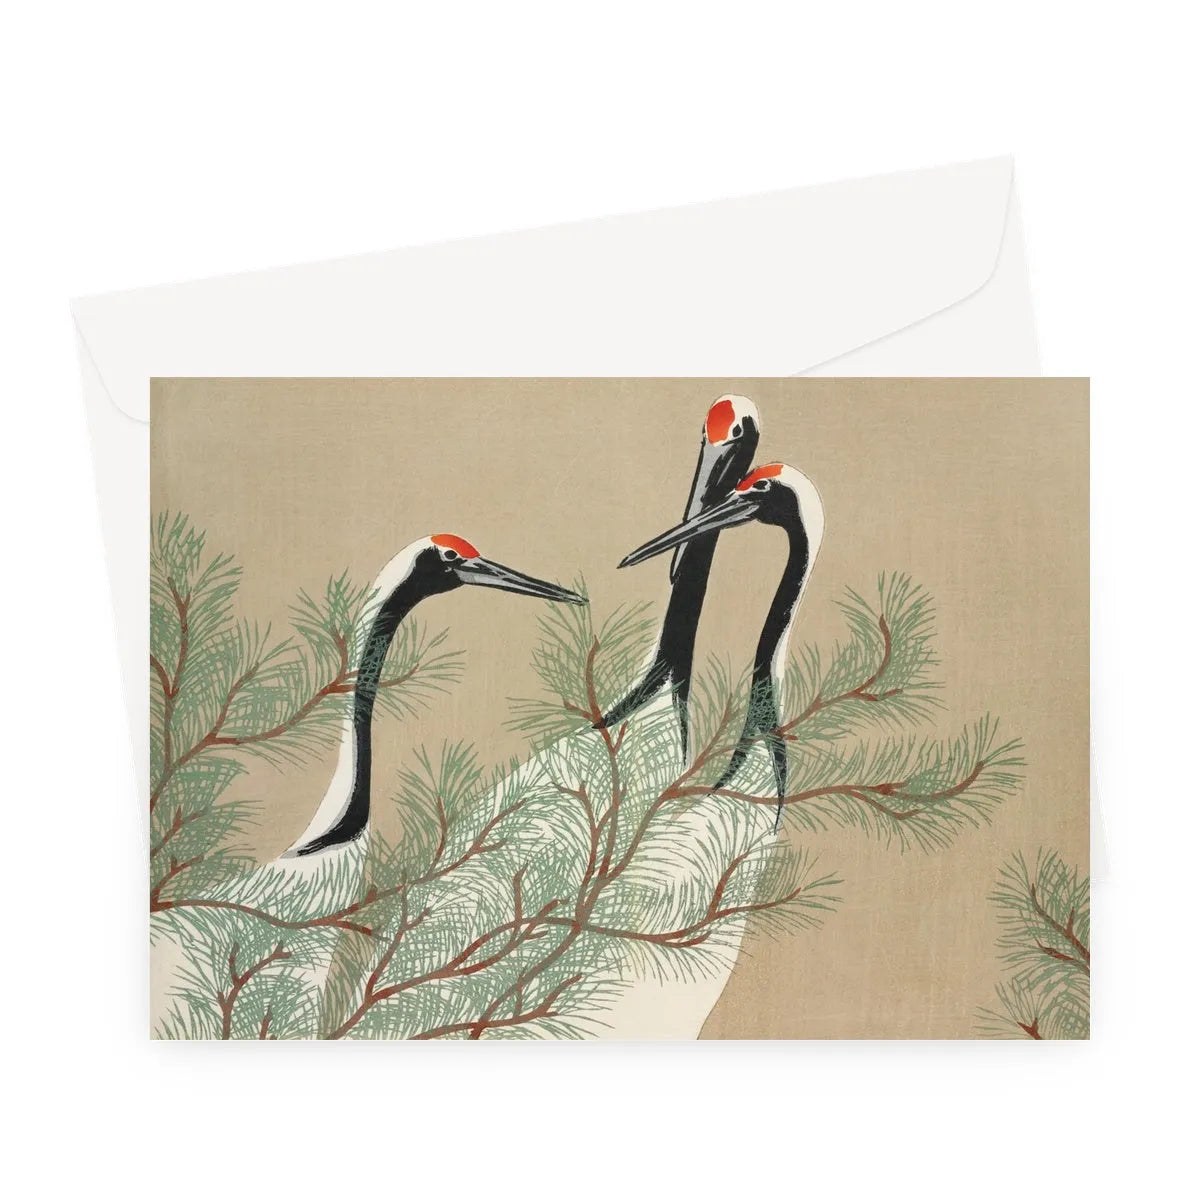 Cranes From Momoyogusa By Kamisaka Sekka Greeting Card - A5 Landscape / 1 Card - Notebooks & Notepads - Aesthetic Art